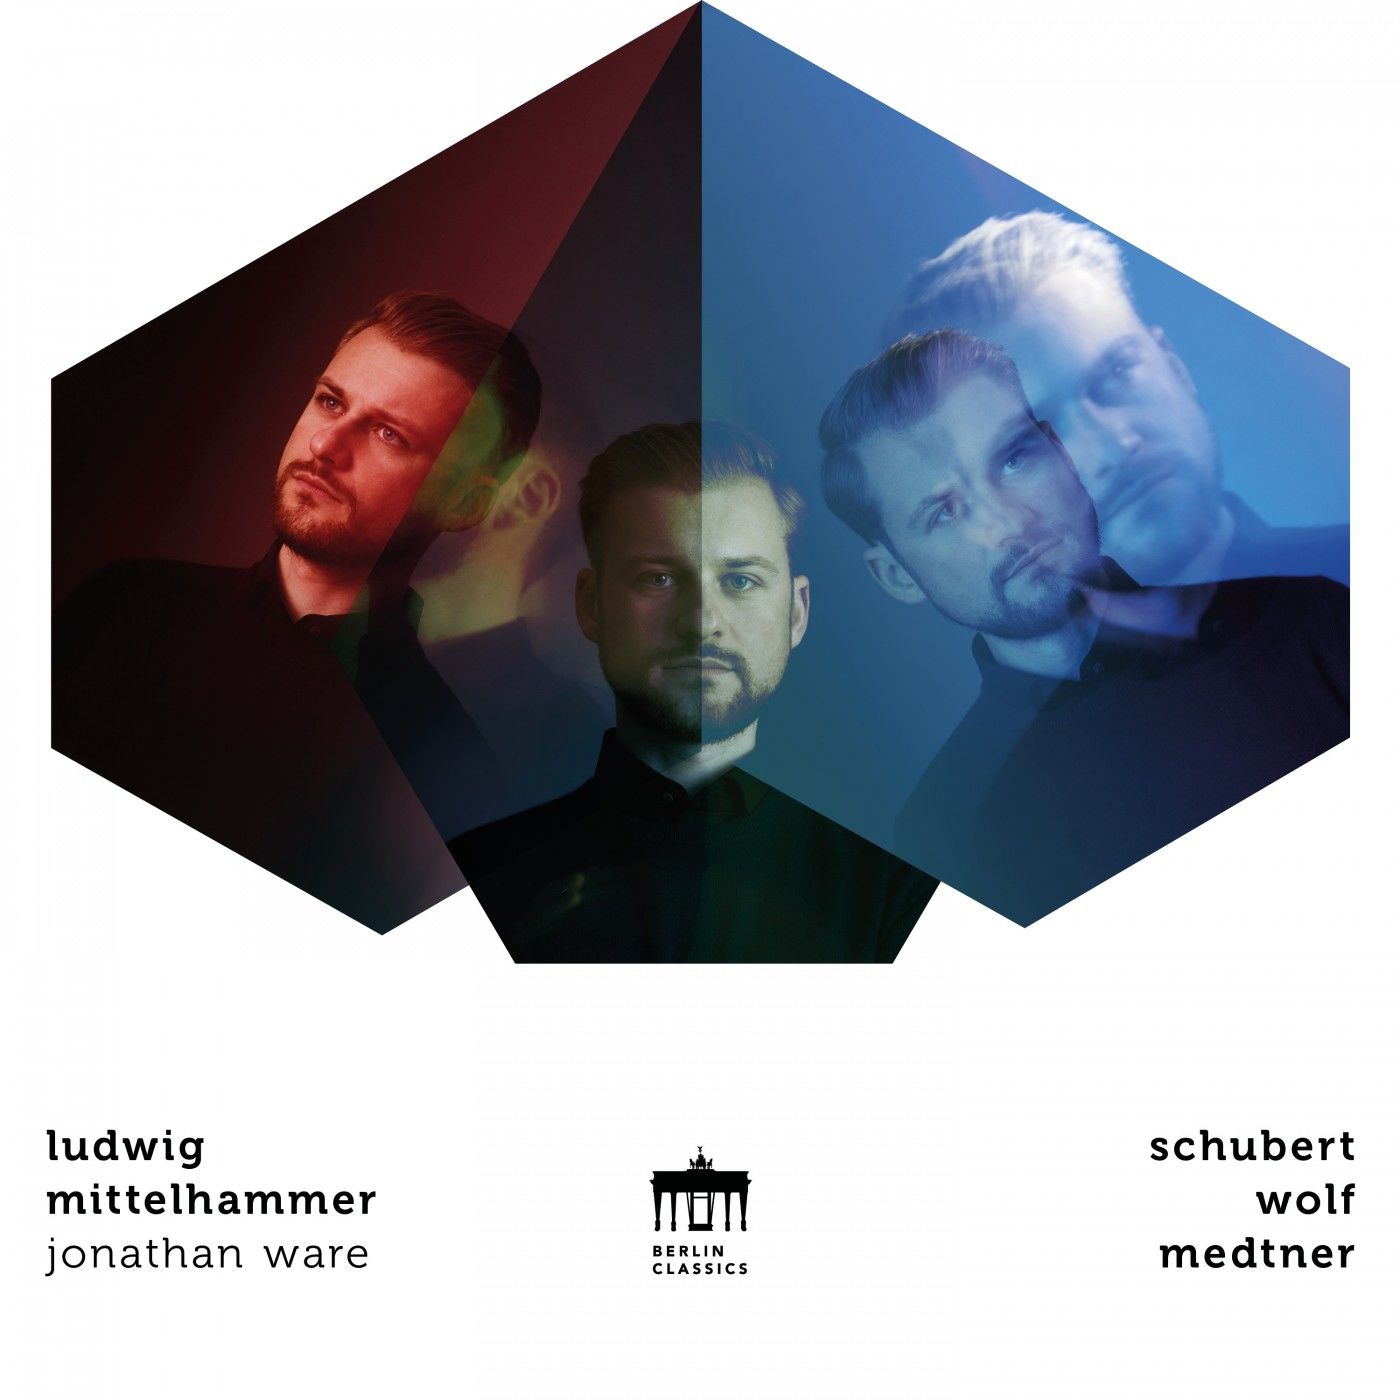 Ludwig Mittelhammer & Jonathan Ware - Schubert - Wolf - Medtner (2019) [FLAC 24bit/96kHz]